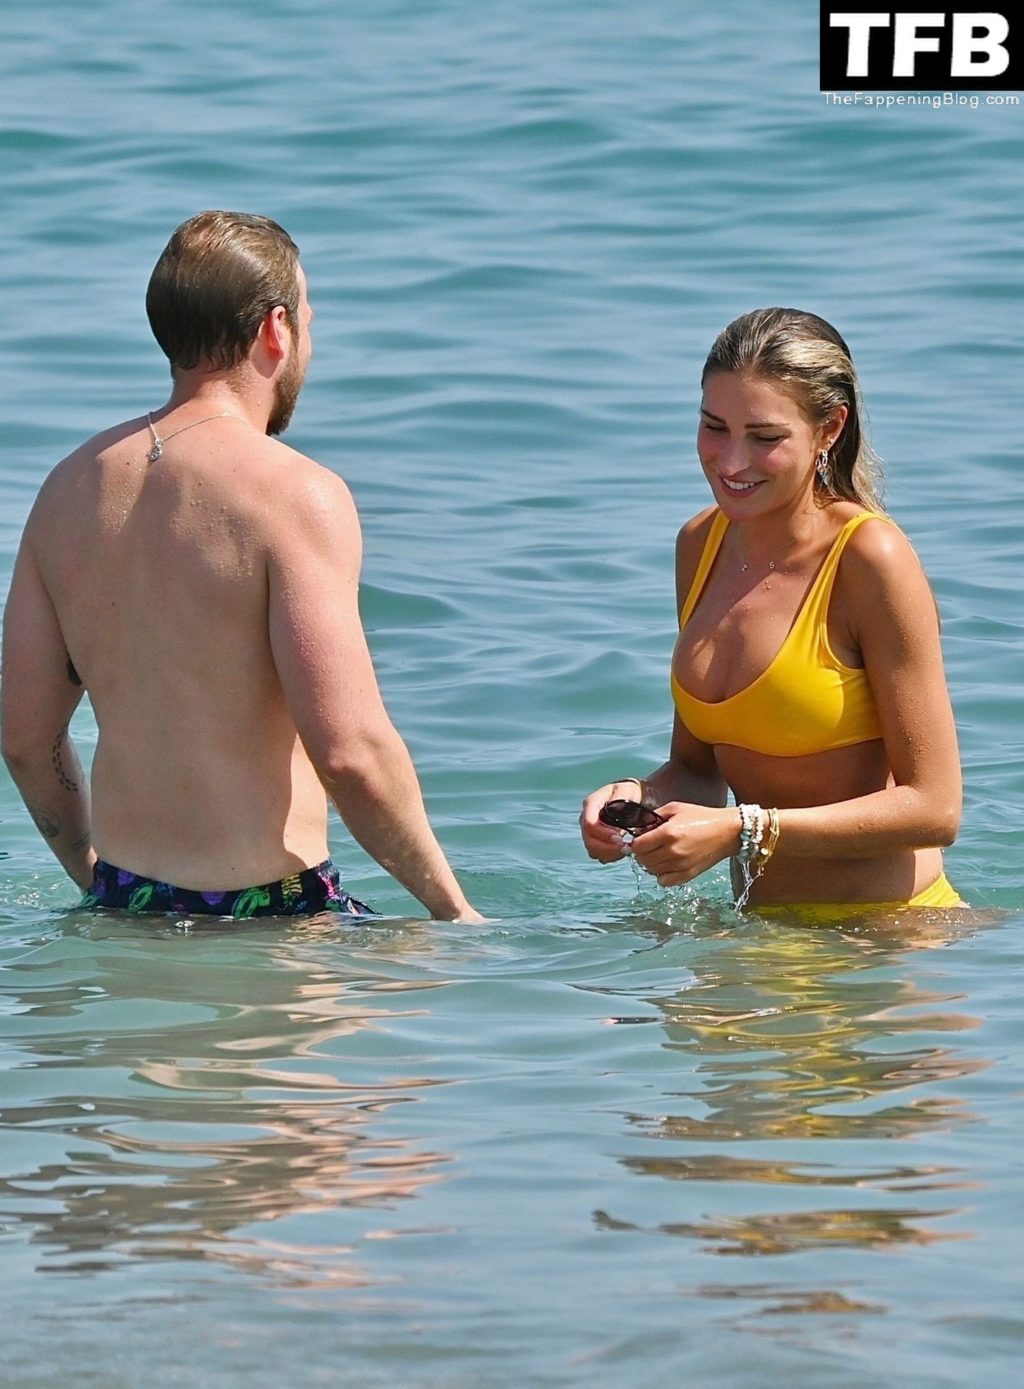 Zara Mcdermott &amp; Sam Thompson Pack on the PDA on the Beaches of Marbella (86 Photos)